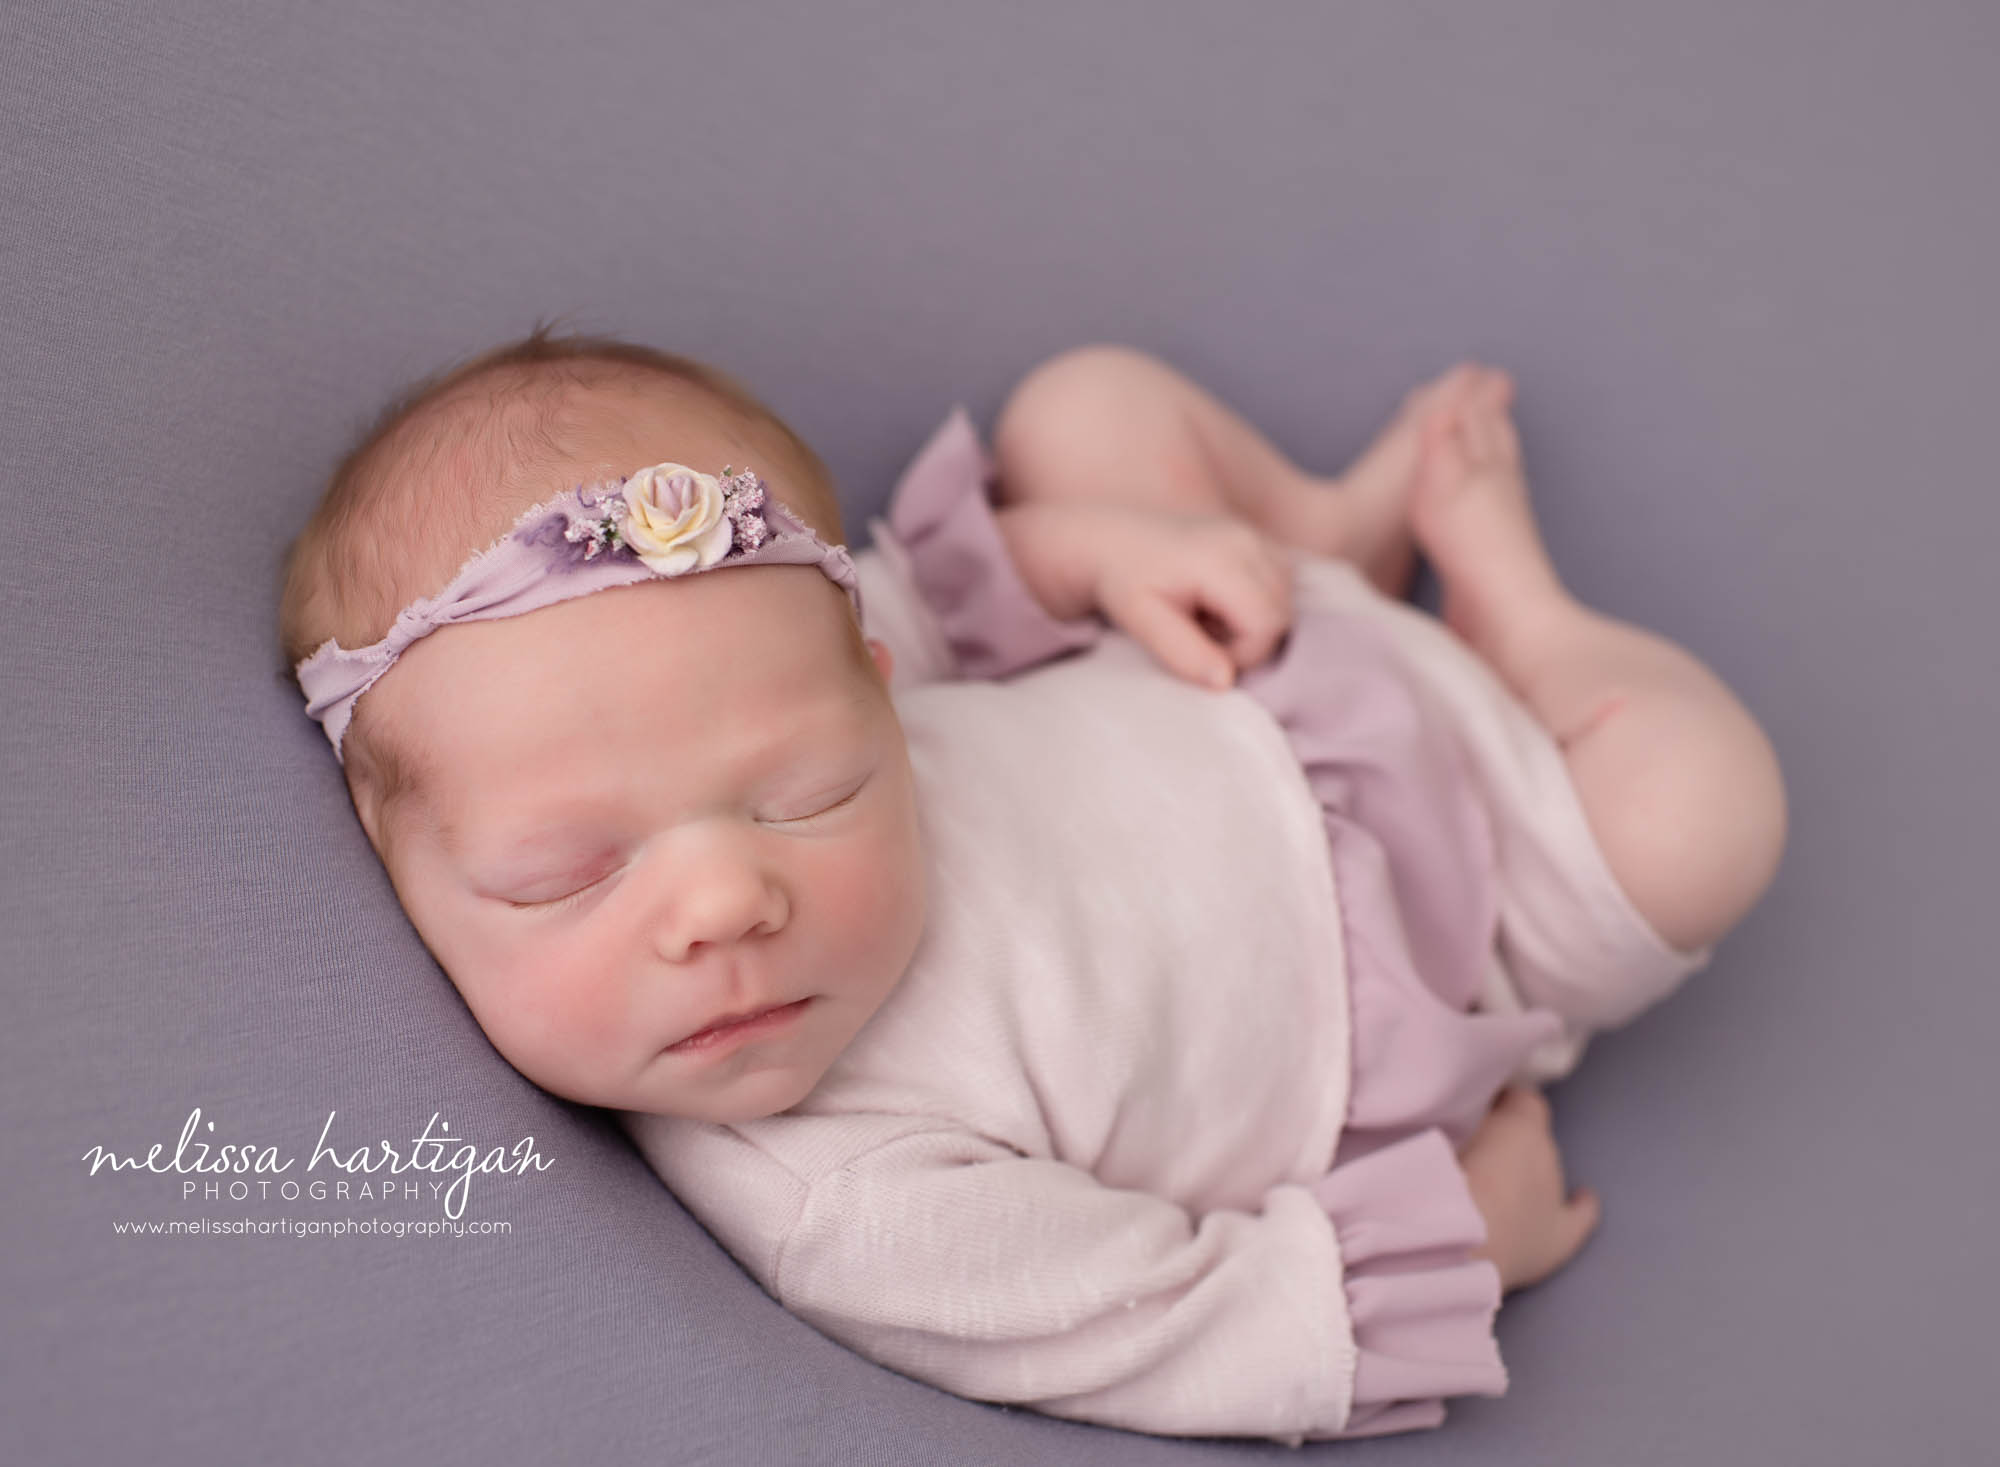 newborn baby girl pose don back in huck finn newborn photography pose wearing light purple outfit and flower headband Newborn Photography Vernon CT